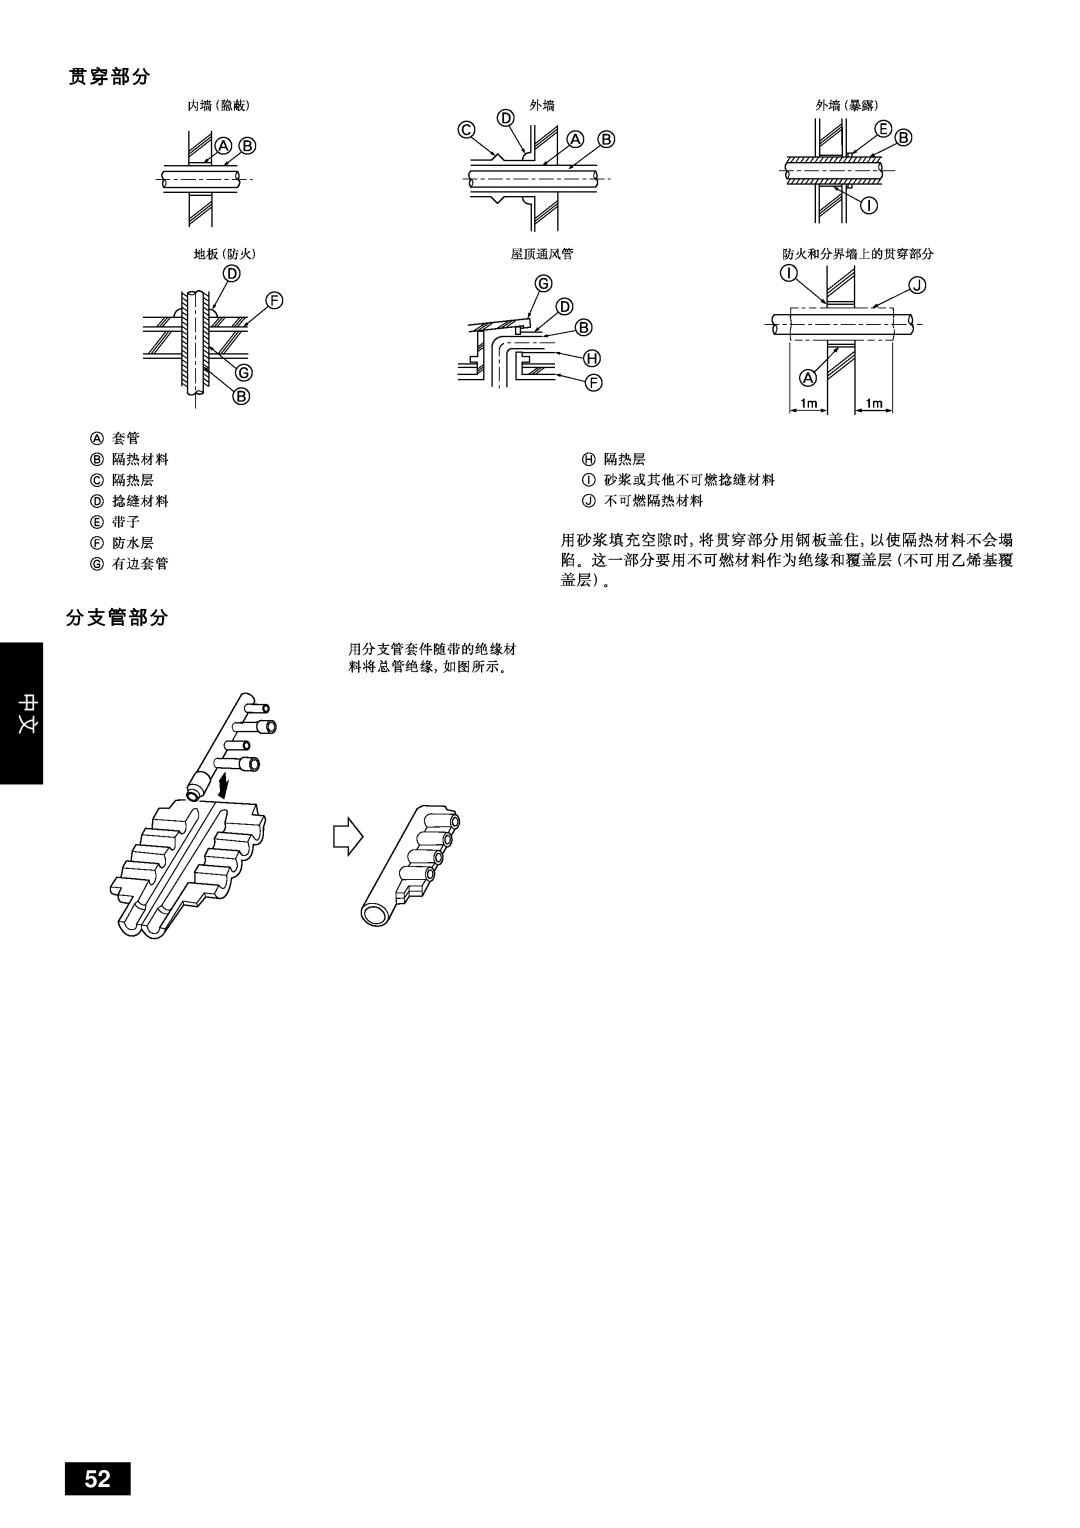 Mitsubishi Electronics PUHY-YMC installation manual D F G B, #$%& *+& 012345678 .#$%&*+,-./0 1$%#234 